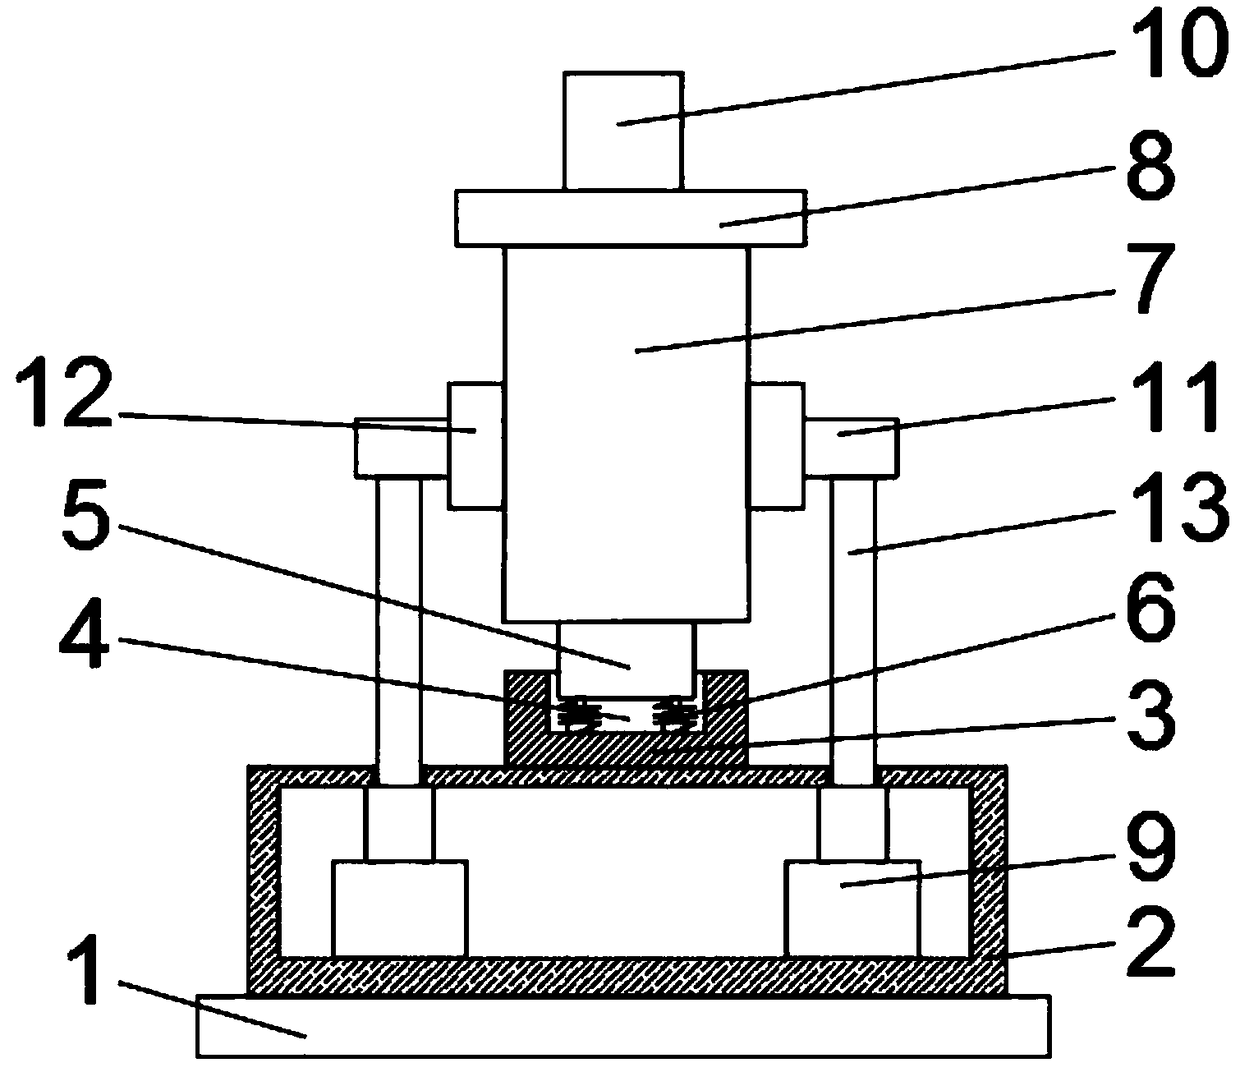 Radar speedometer with damping function and damping method